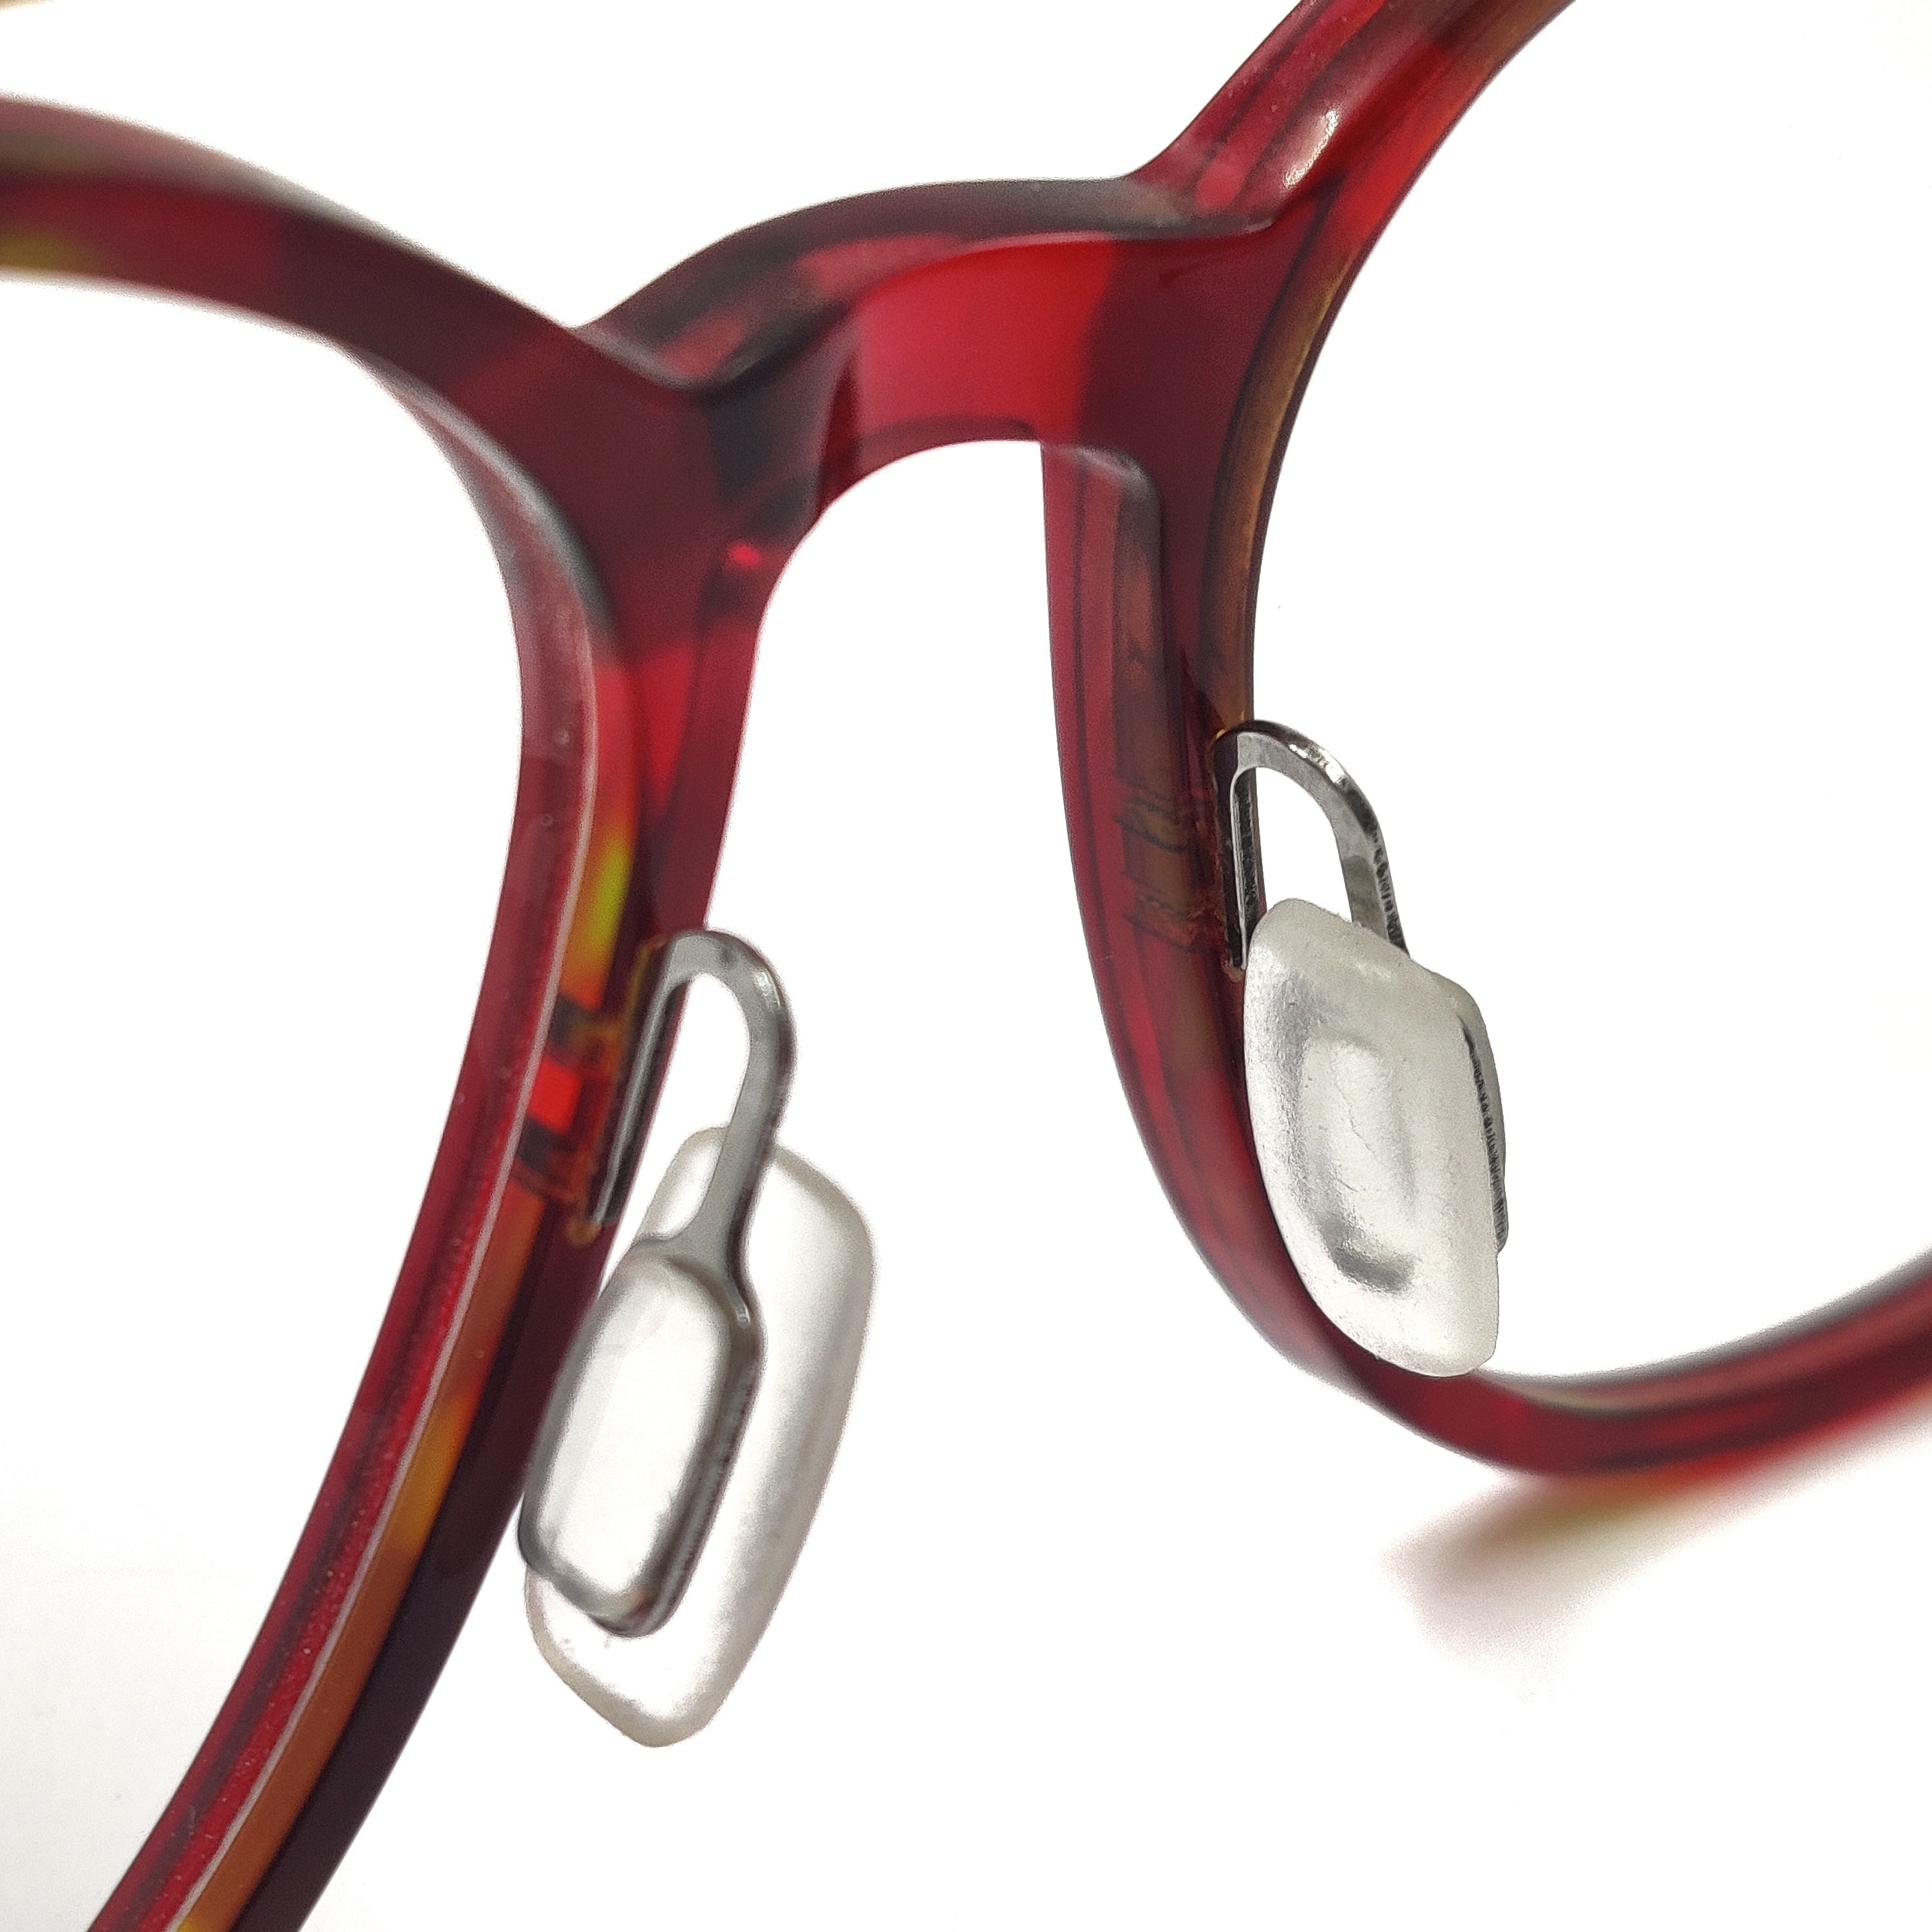 Gafas de bloqueo de luz azul, montura de gafas de acetato, lunetas de bloqueo personalizadas, montura de acetato óptico de moda, bisagra libre